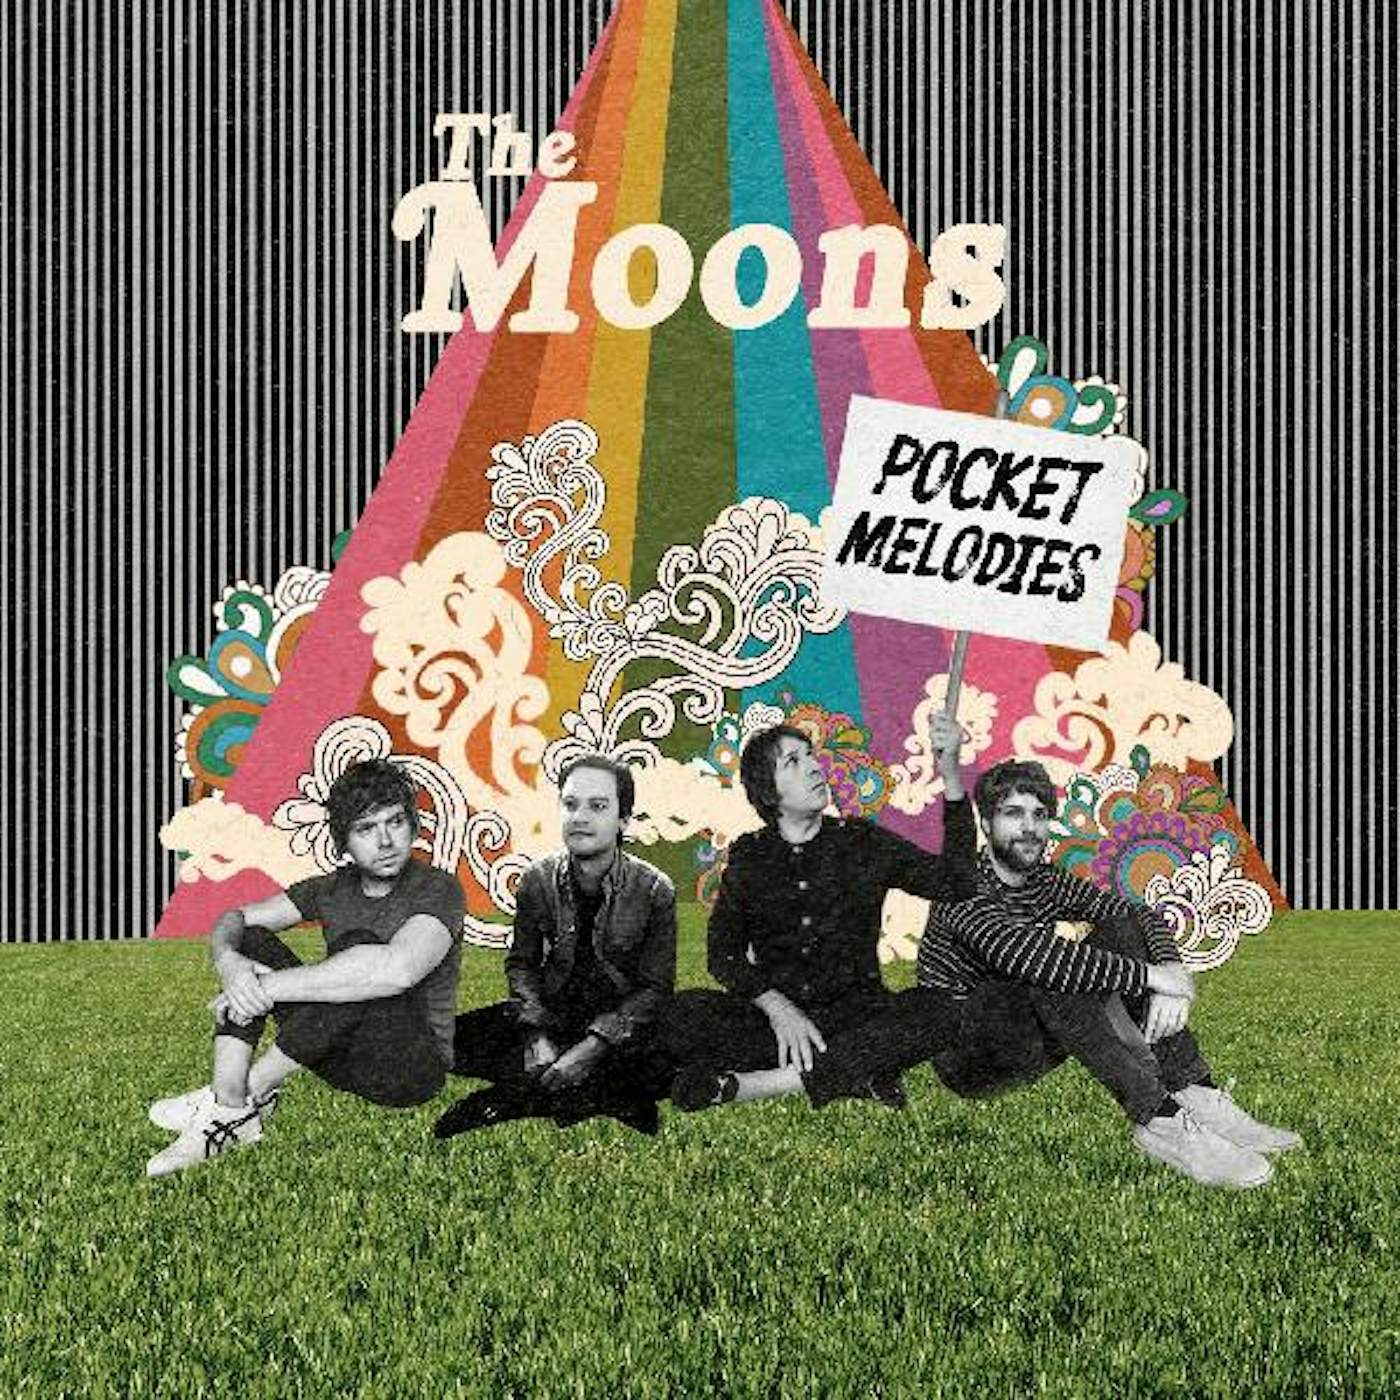 Moons Pocket Melodies (Purple Vinyl) Vinyl Record